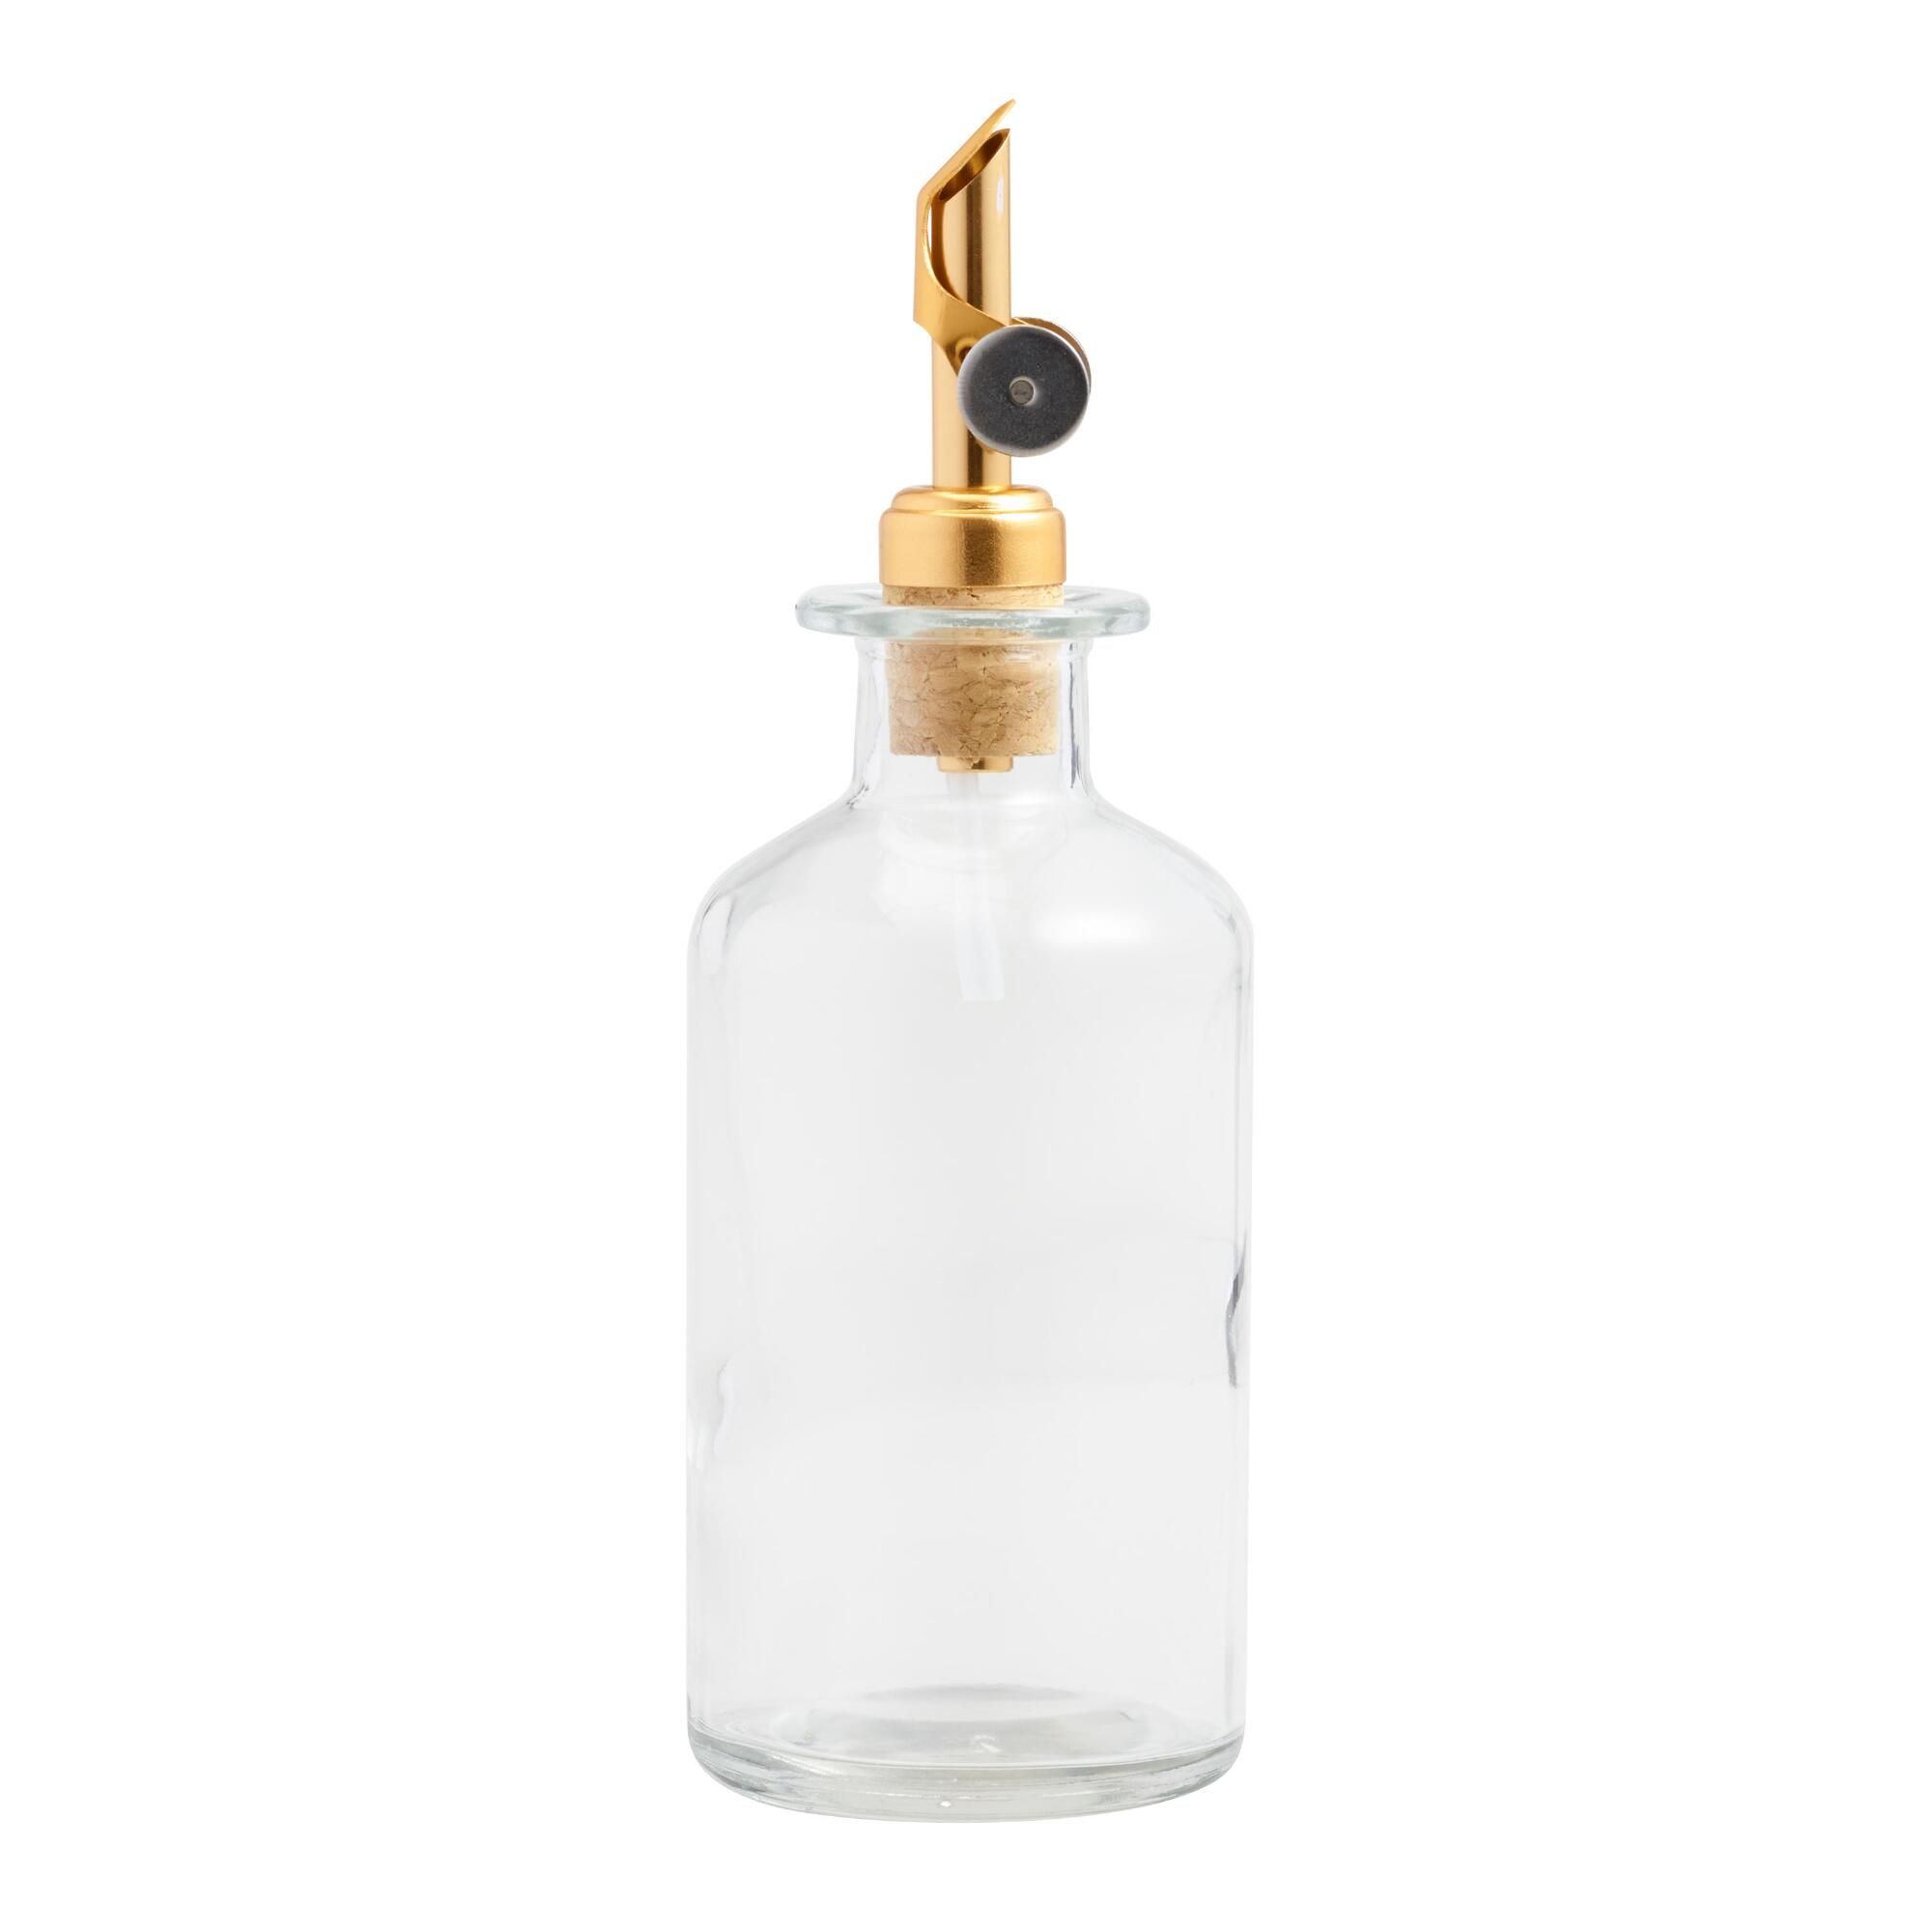 Glass Oil Bottle with Gold Stopper by World Market | World Market